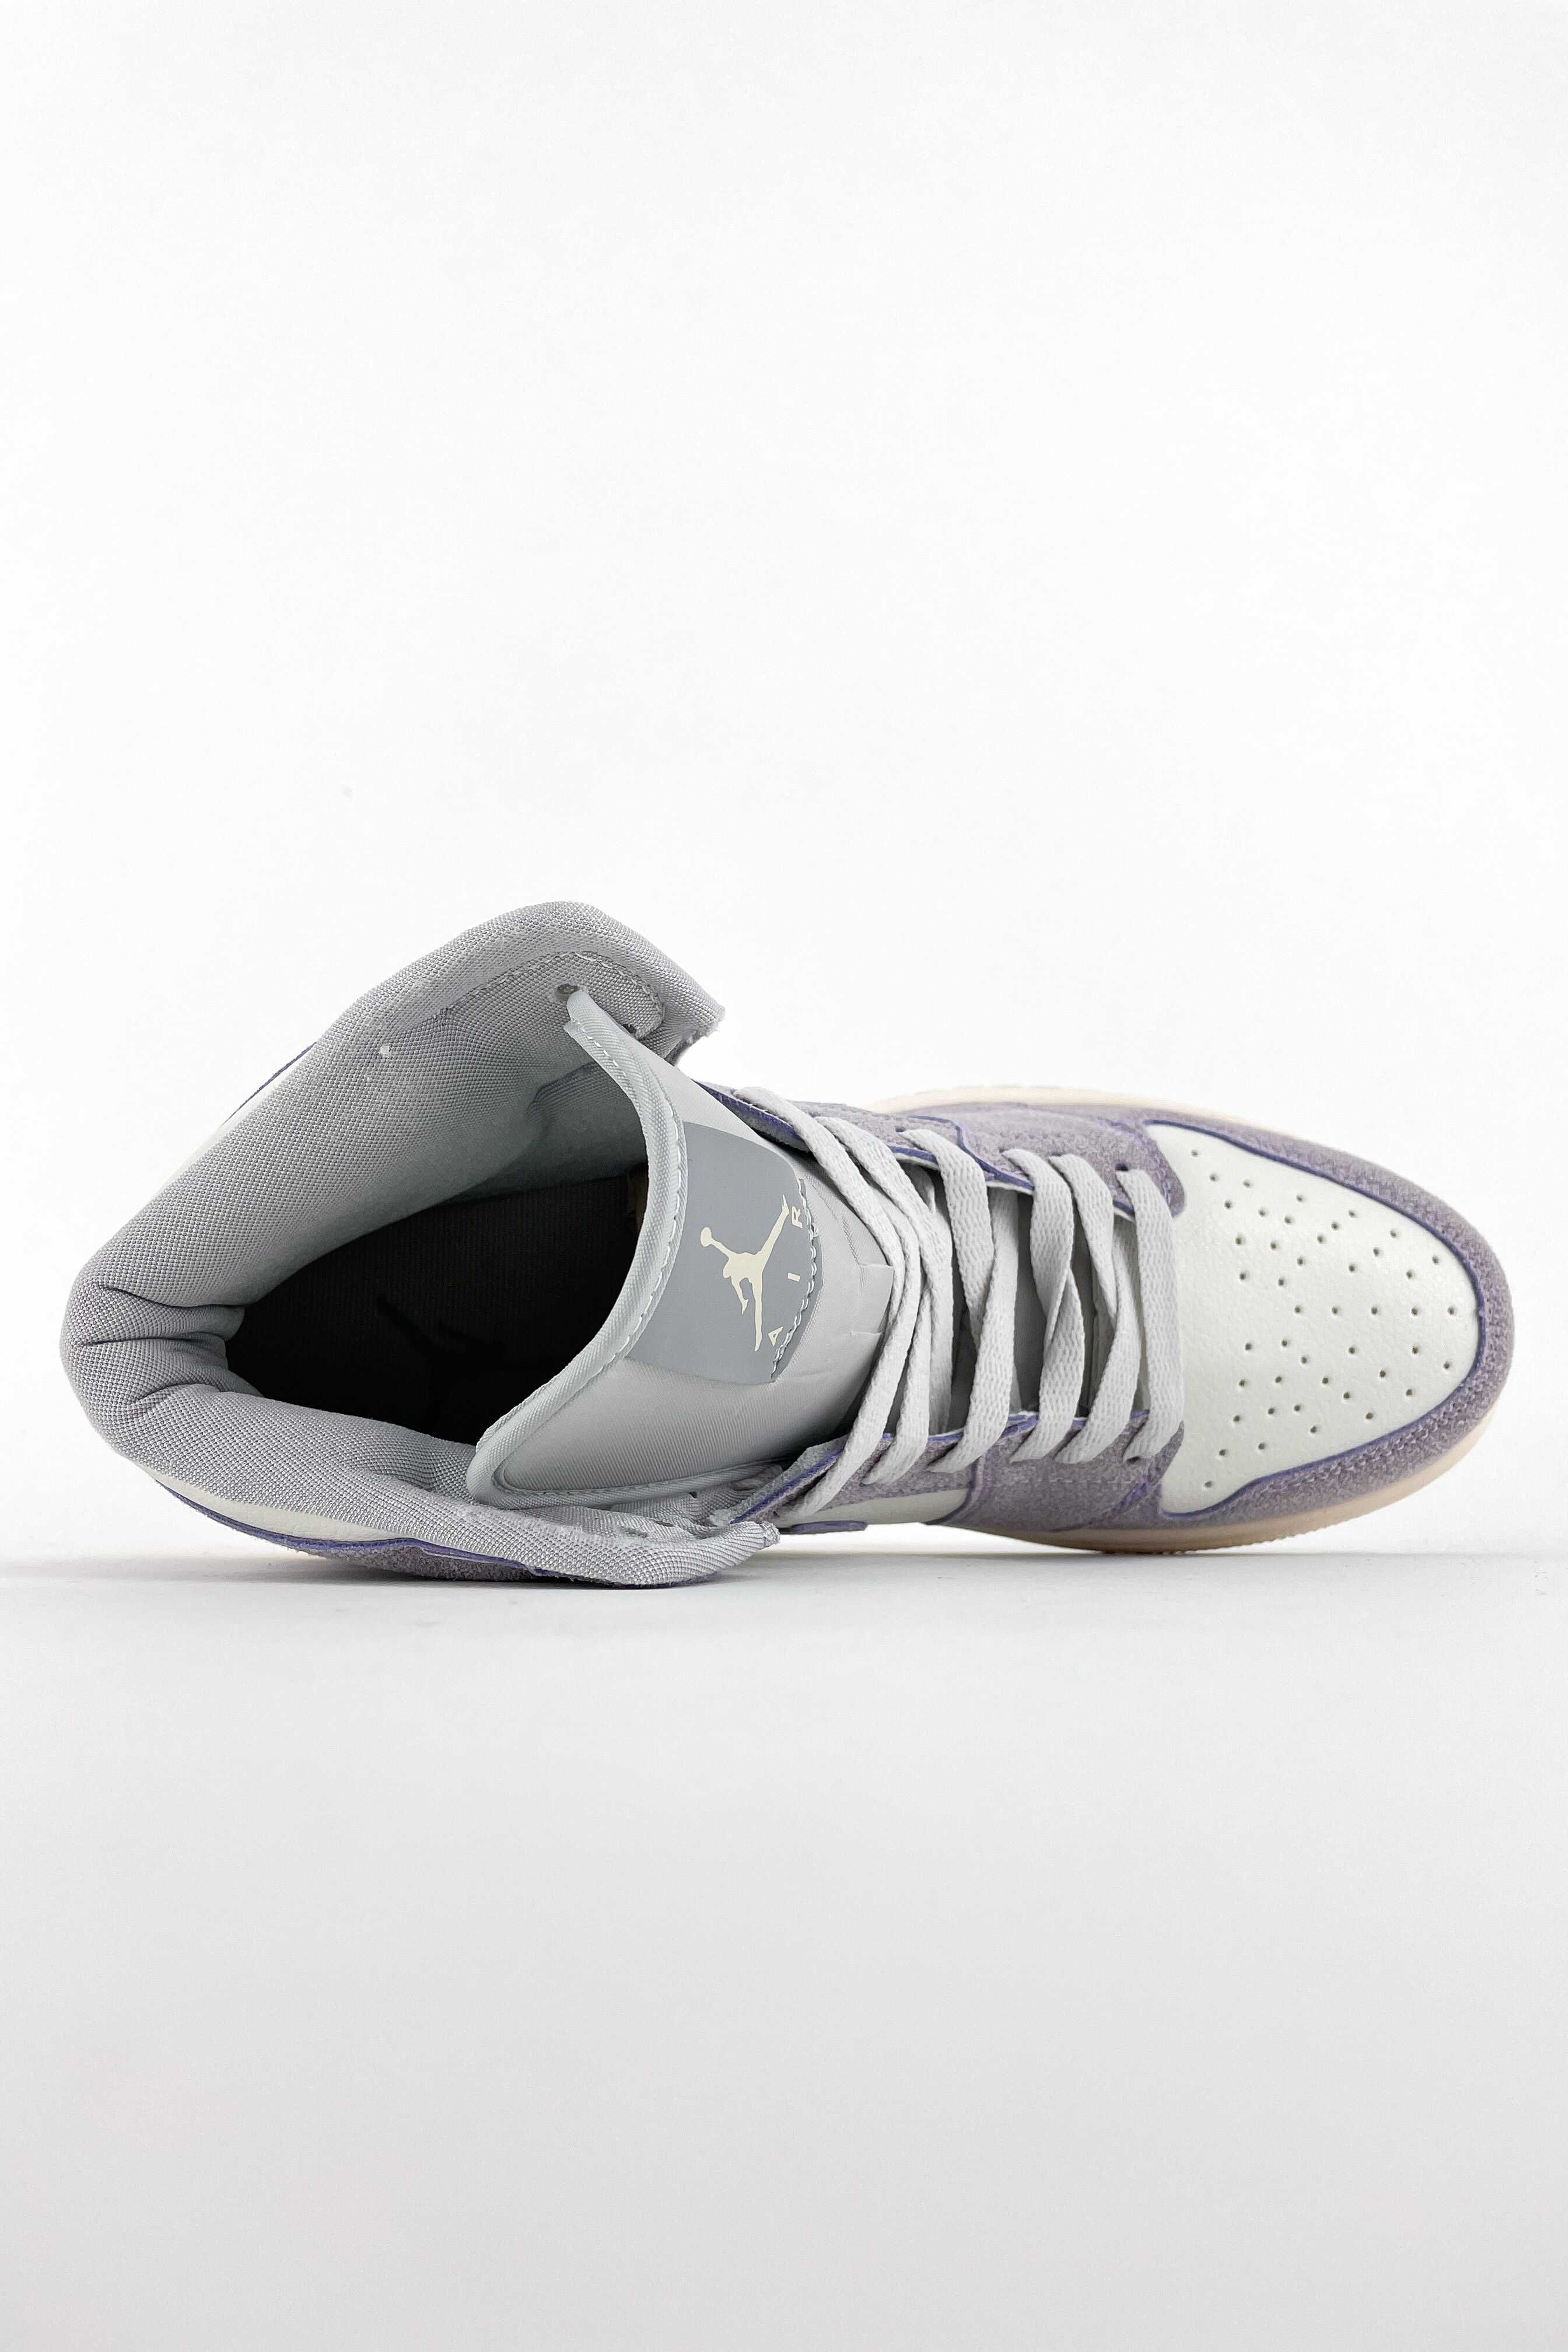 Nike Air Jordan 1 Retro High Light Purple